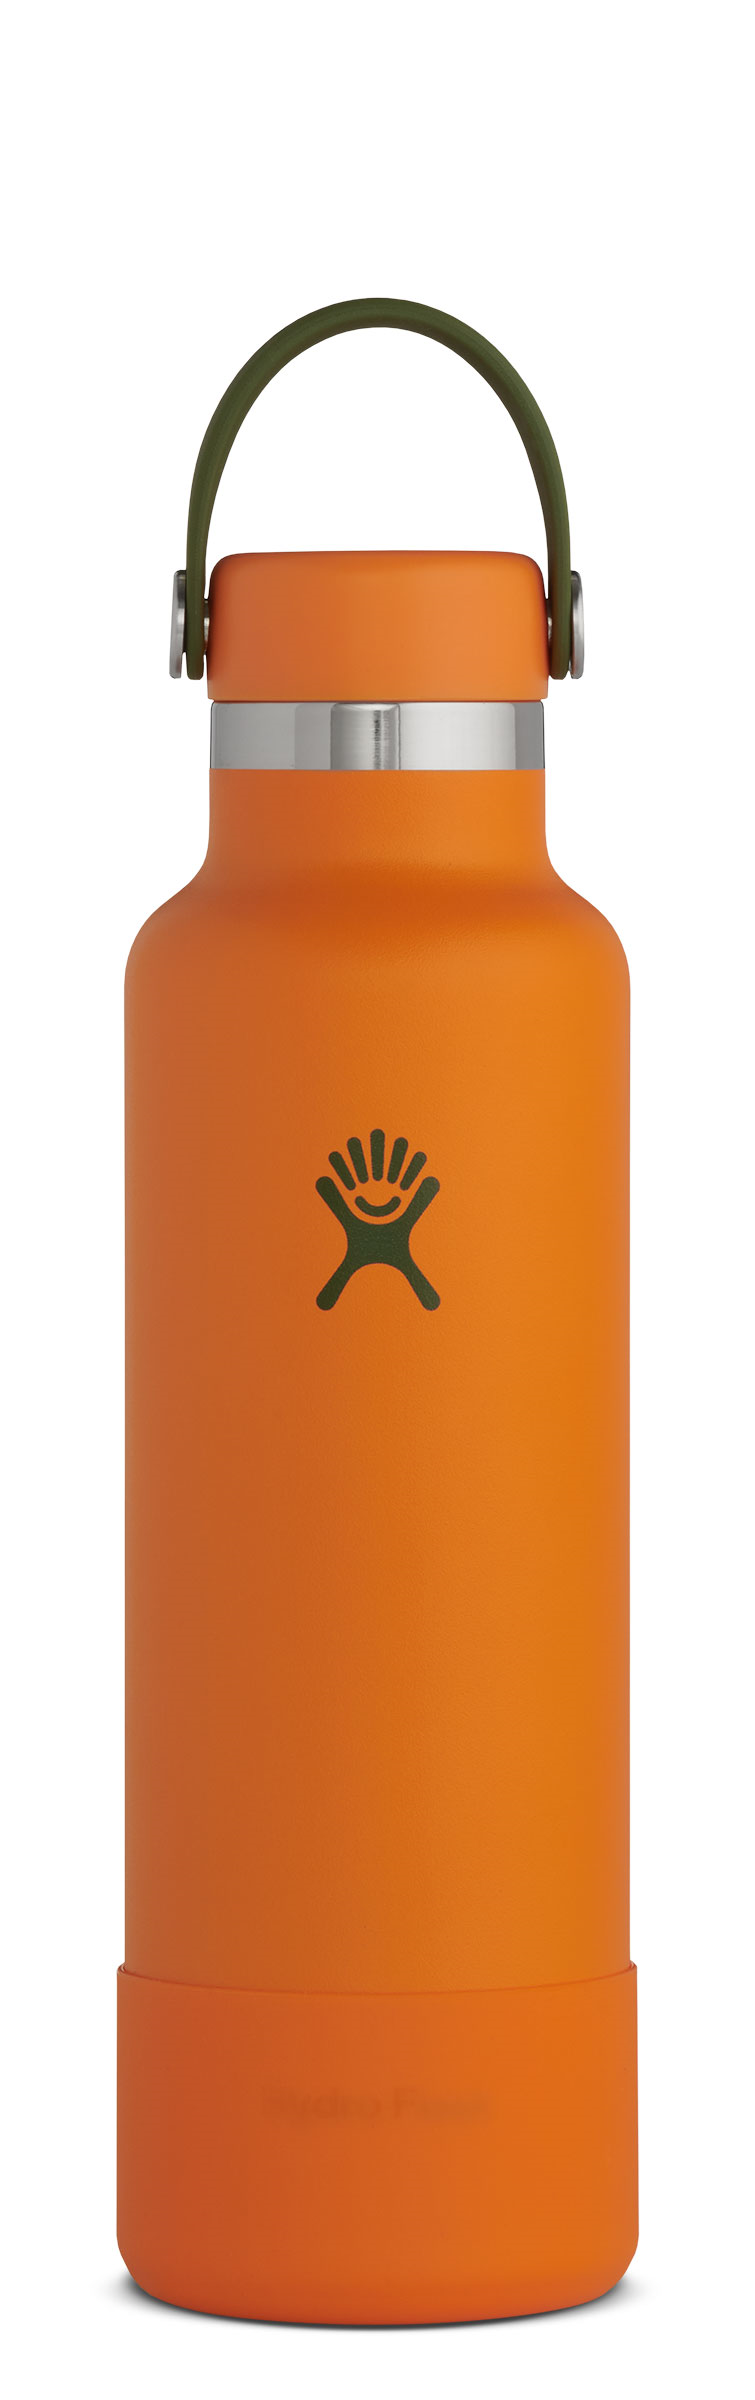 Limited Edition* Certified Refrigeration Operator – CRO Hydro-flask Orange